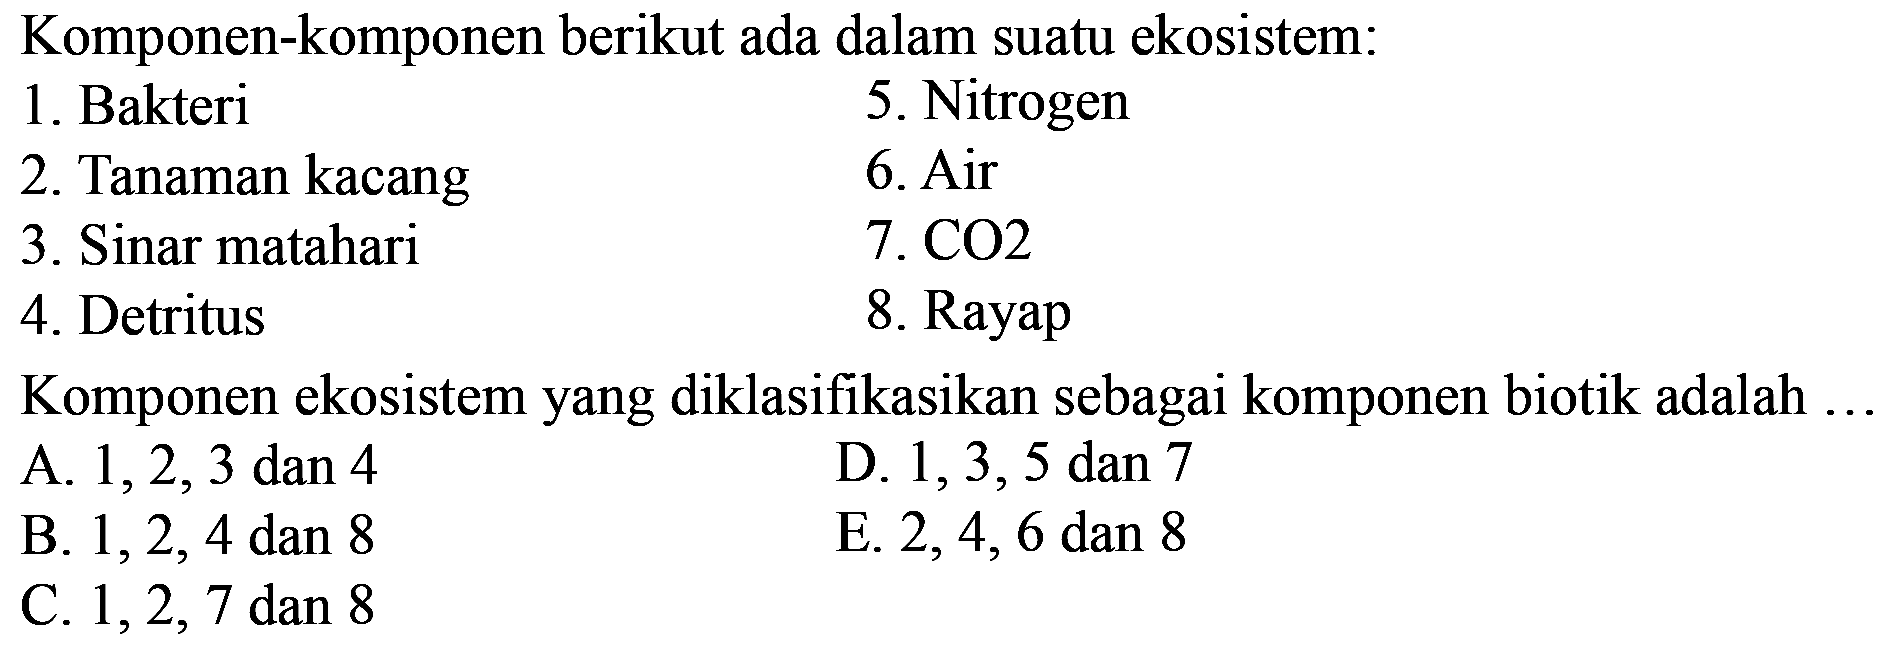 Komponen-komponen berikut ada dalam suatu ekosistem:
1. Bakteri 
5. Nitrogen 
2. Tanaman kacang 
6. Air
3. Sinar matahari 
7. CO 2 
4. Detritus 
8. Rayap
Komponen ekosistem yang diklasifikasikan sebagai komponen biotik adalah ... 
A. 1,2,3 dan 4
D. 1,3,5 dan 7
B. 1,2,4 dan 8
E. 2,4,6 dan 8
C. 1,2,7 dan 8